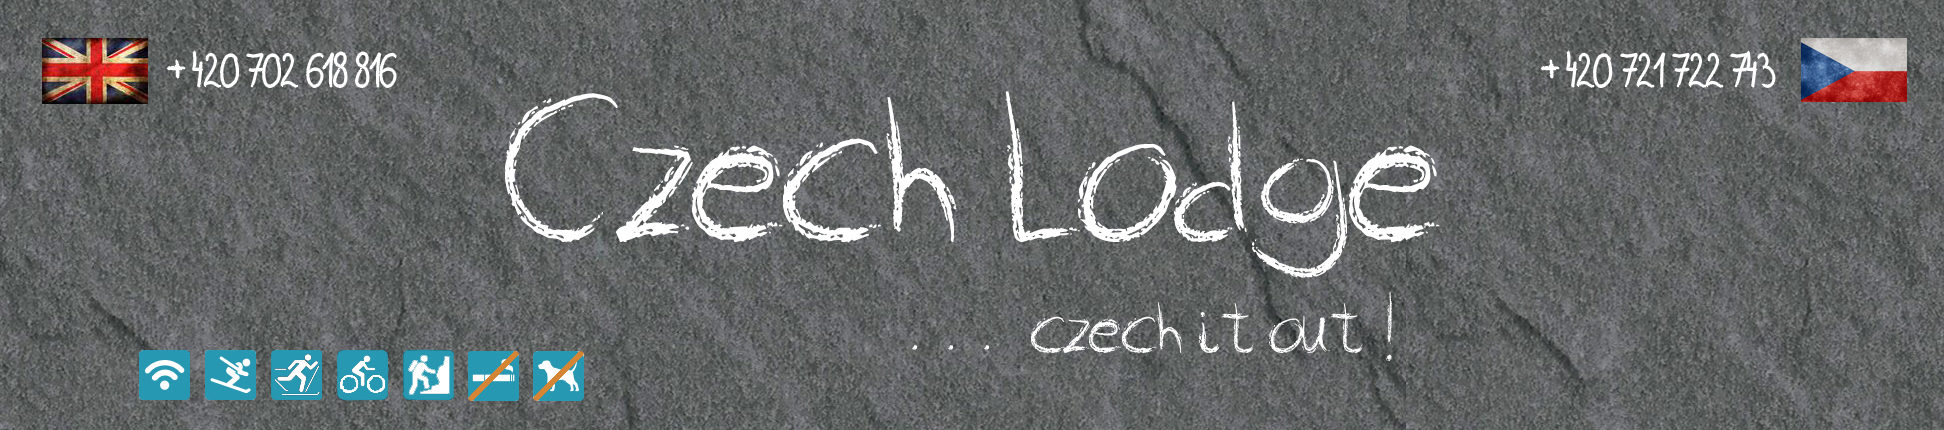 CzechLodge